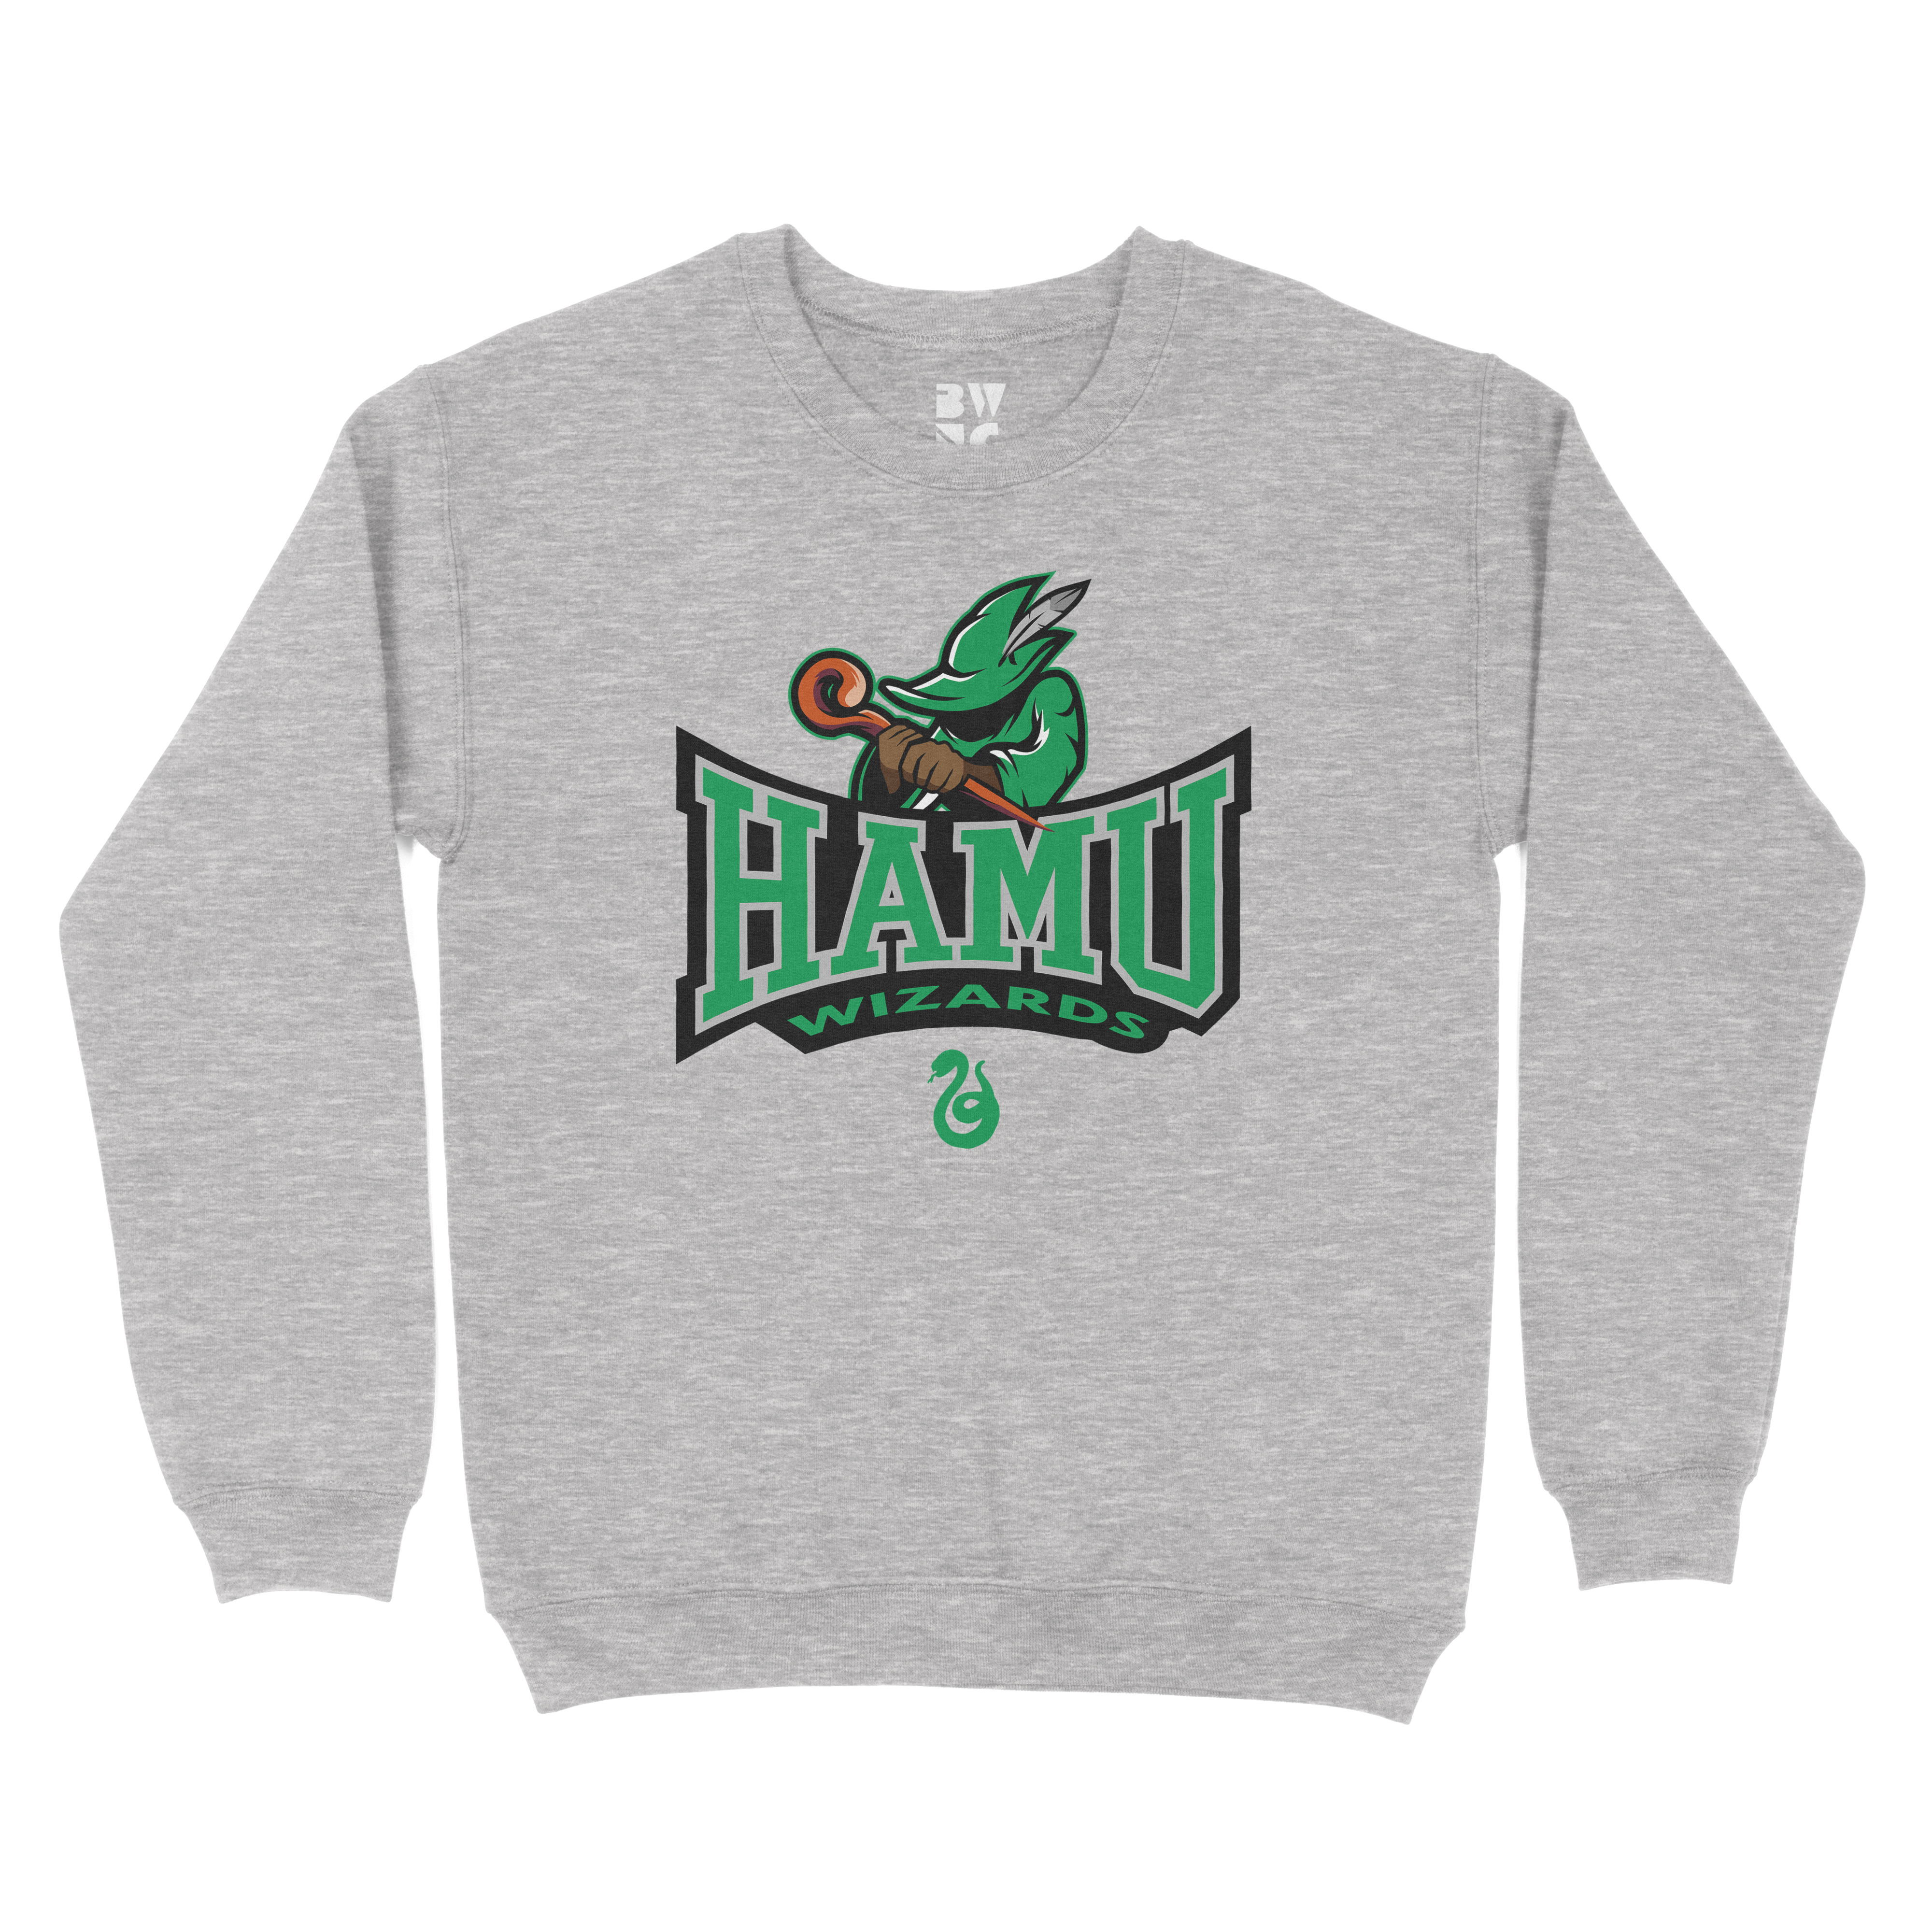 HAMU Wizards Crewneck Sweater (Green House)